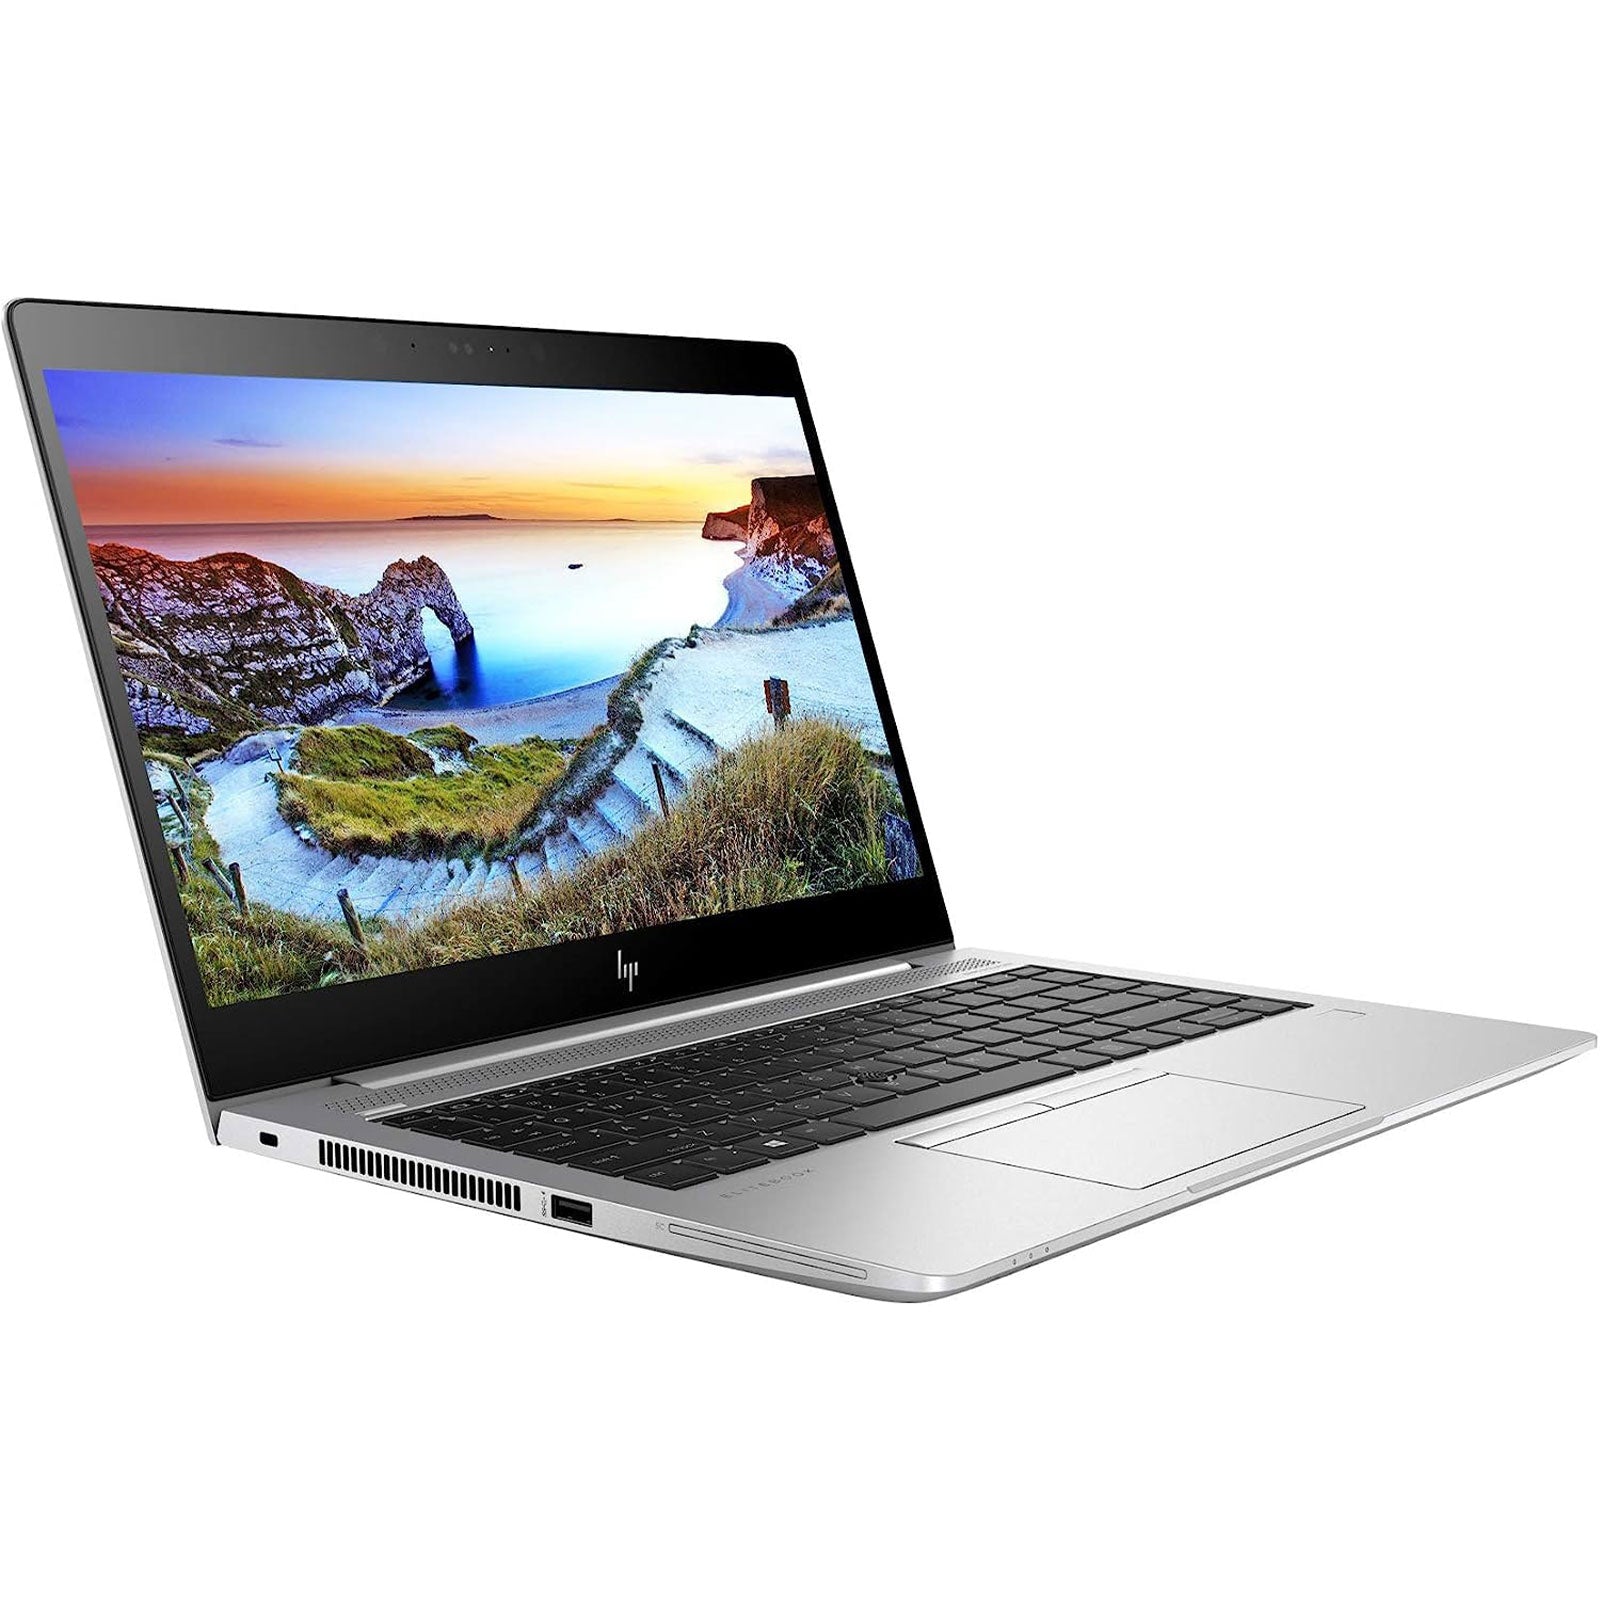 Notebook ricondizionato - Grado A - HP EliteBook 850 G5 Notebook PC Portatile 15.6" Intel i5-8265U Ram 16GB SSD 256GB Webcam (Ricondizionato Grado A) - Disponibile in 2-4 giorni lavorativi